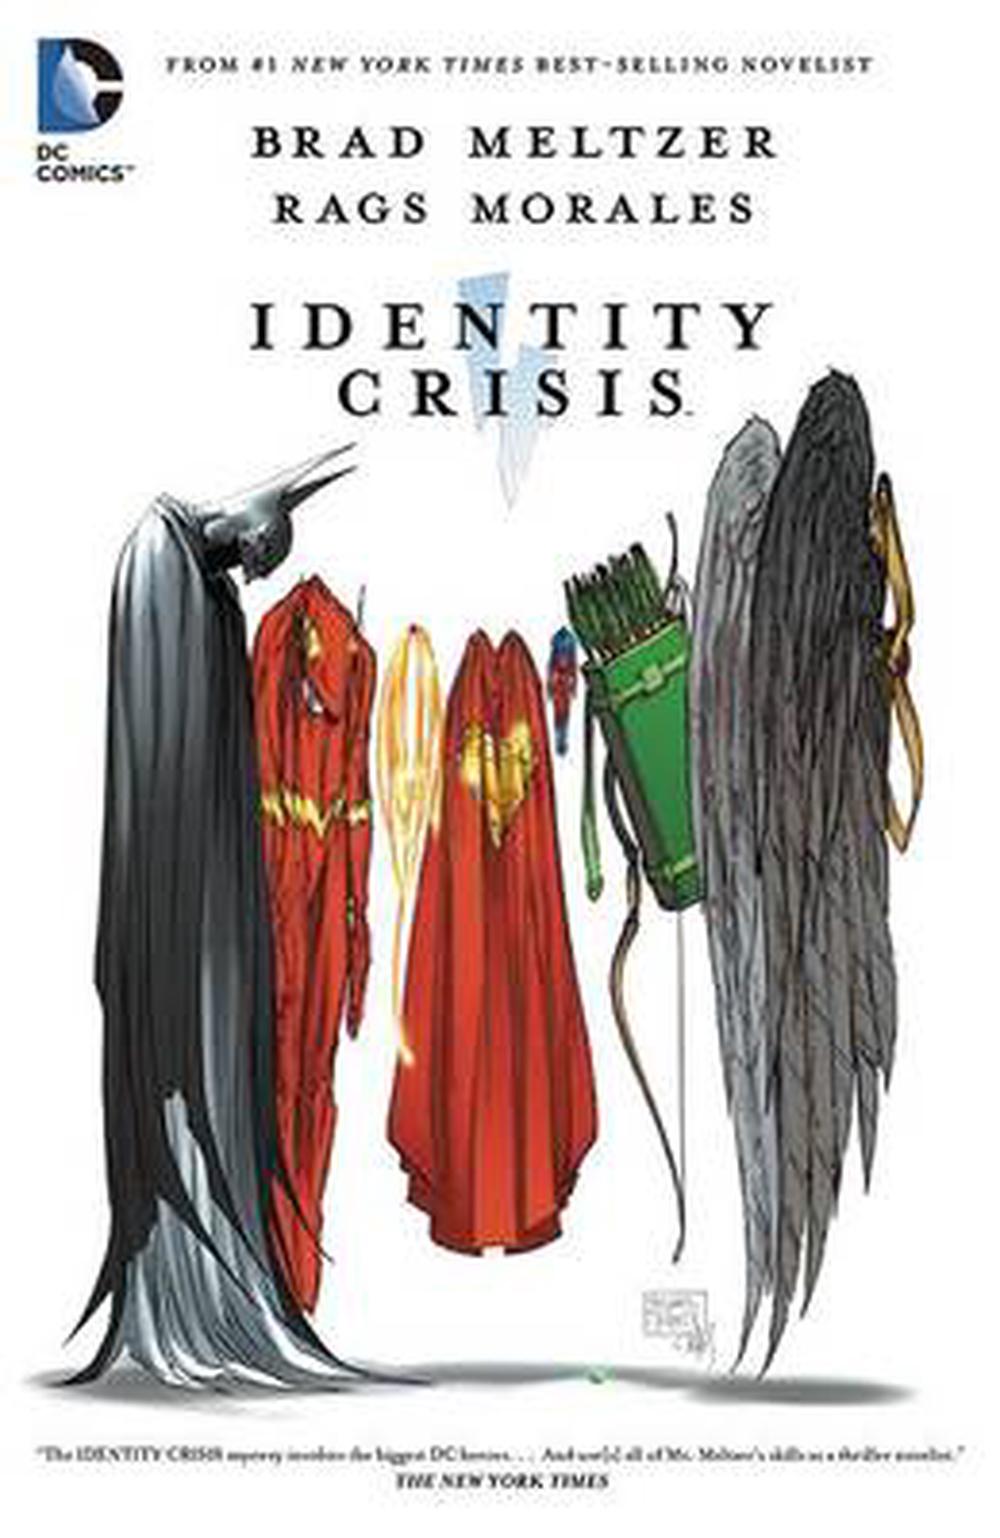 Identity Crisis by Brad Meltzer, Paperback, 9781401263133 | Buy online